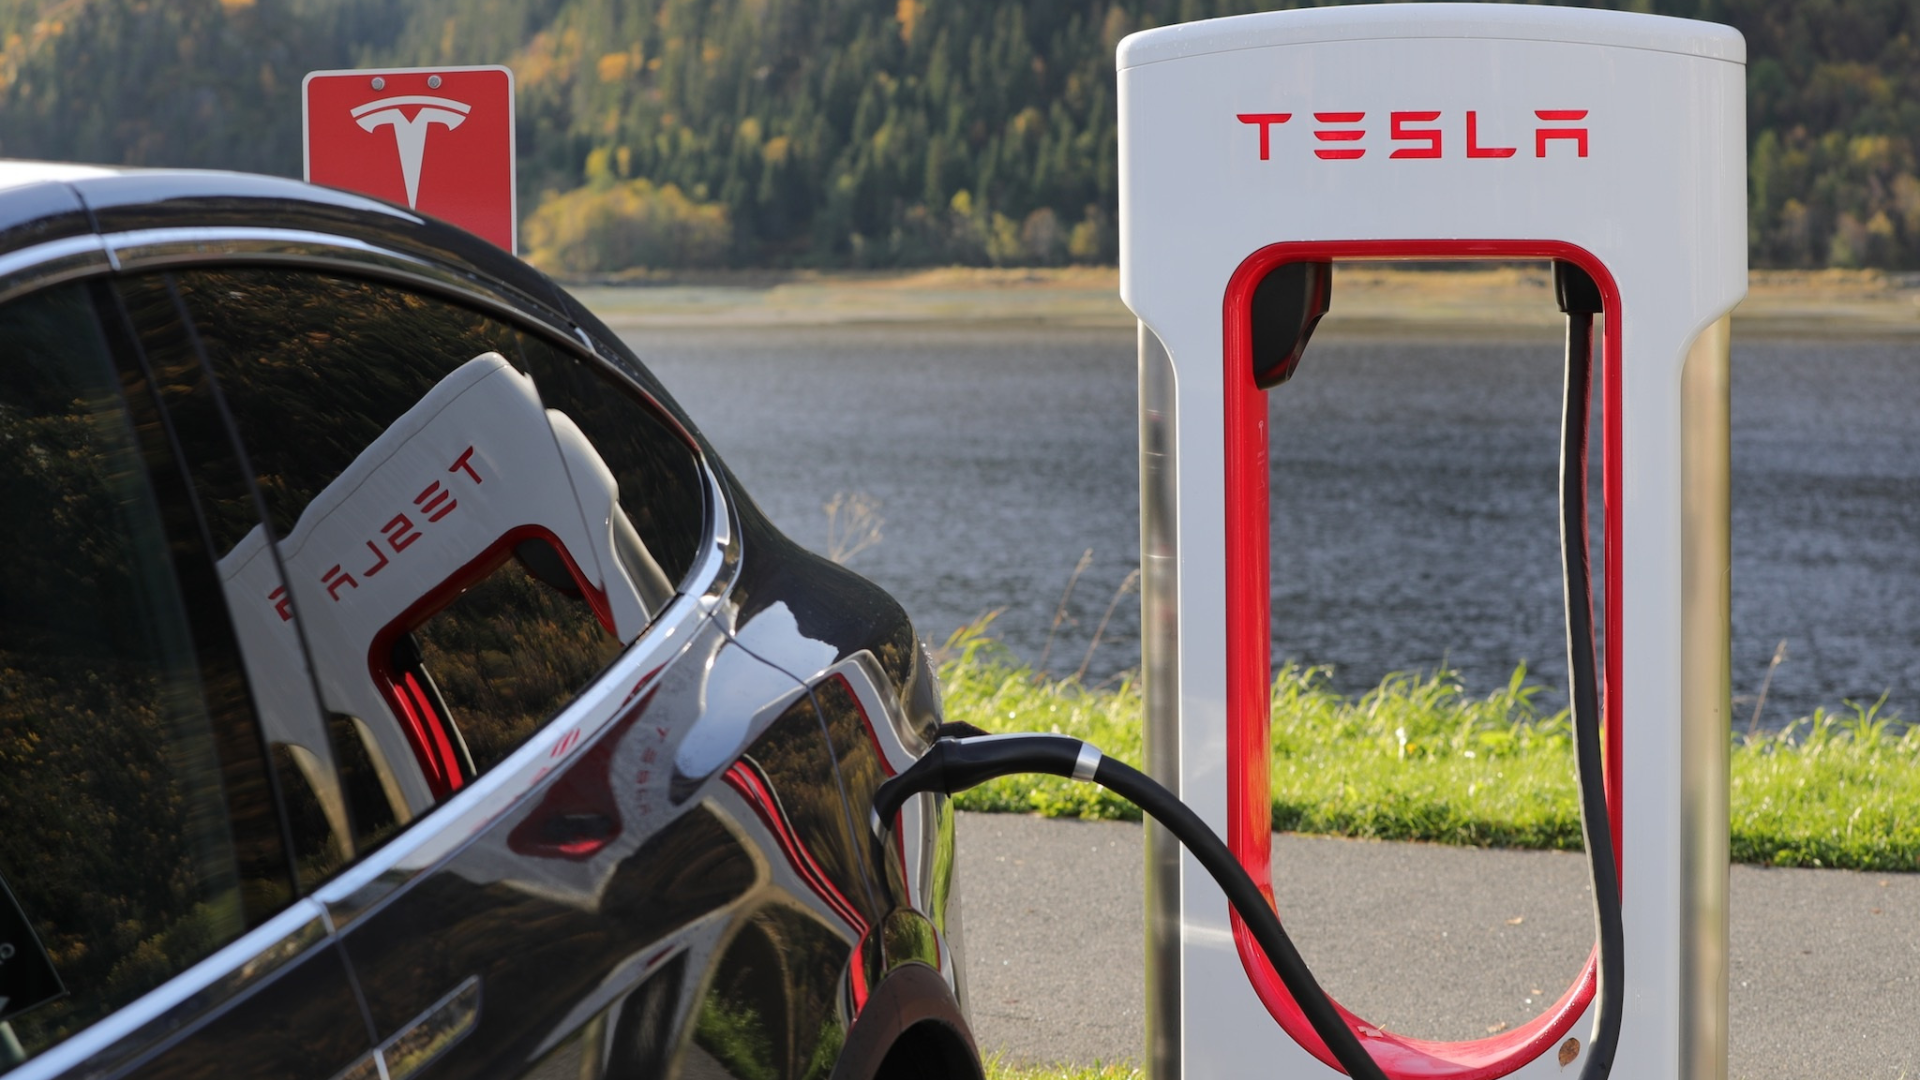 Tesla's Brand On Electronic Recharging Stations